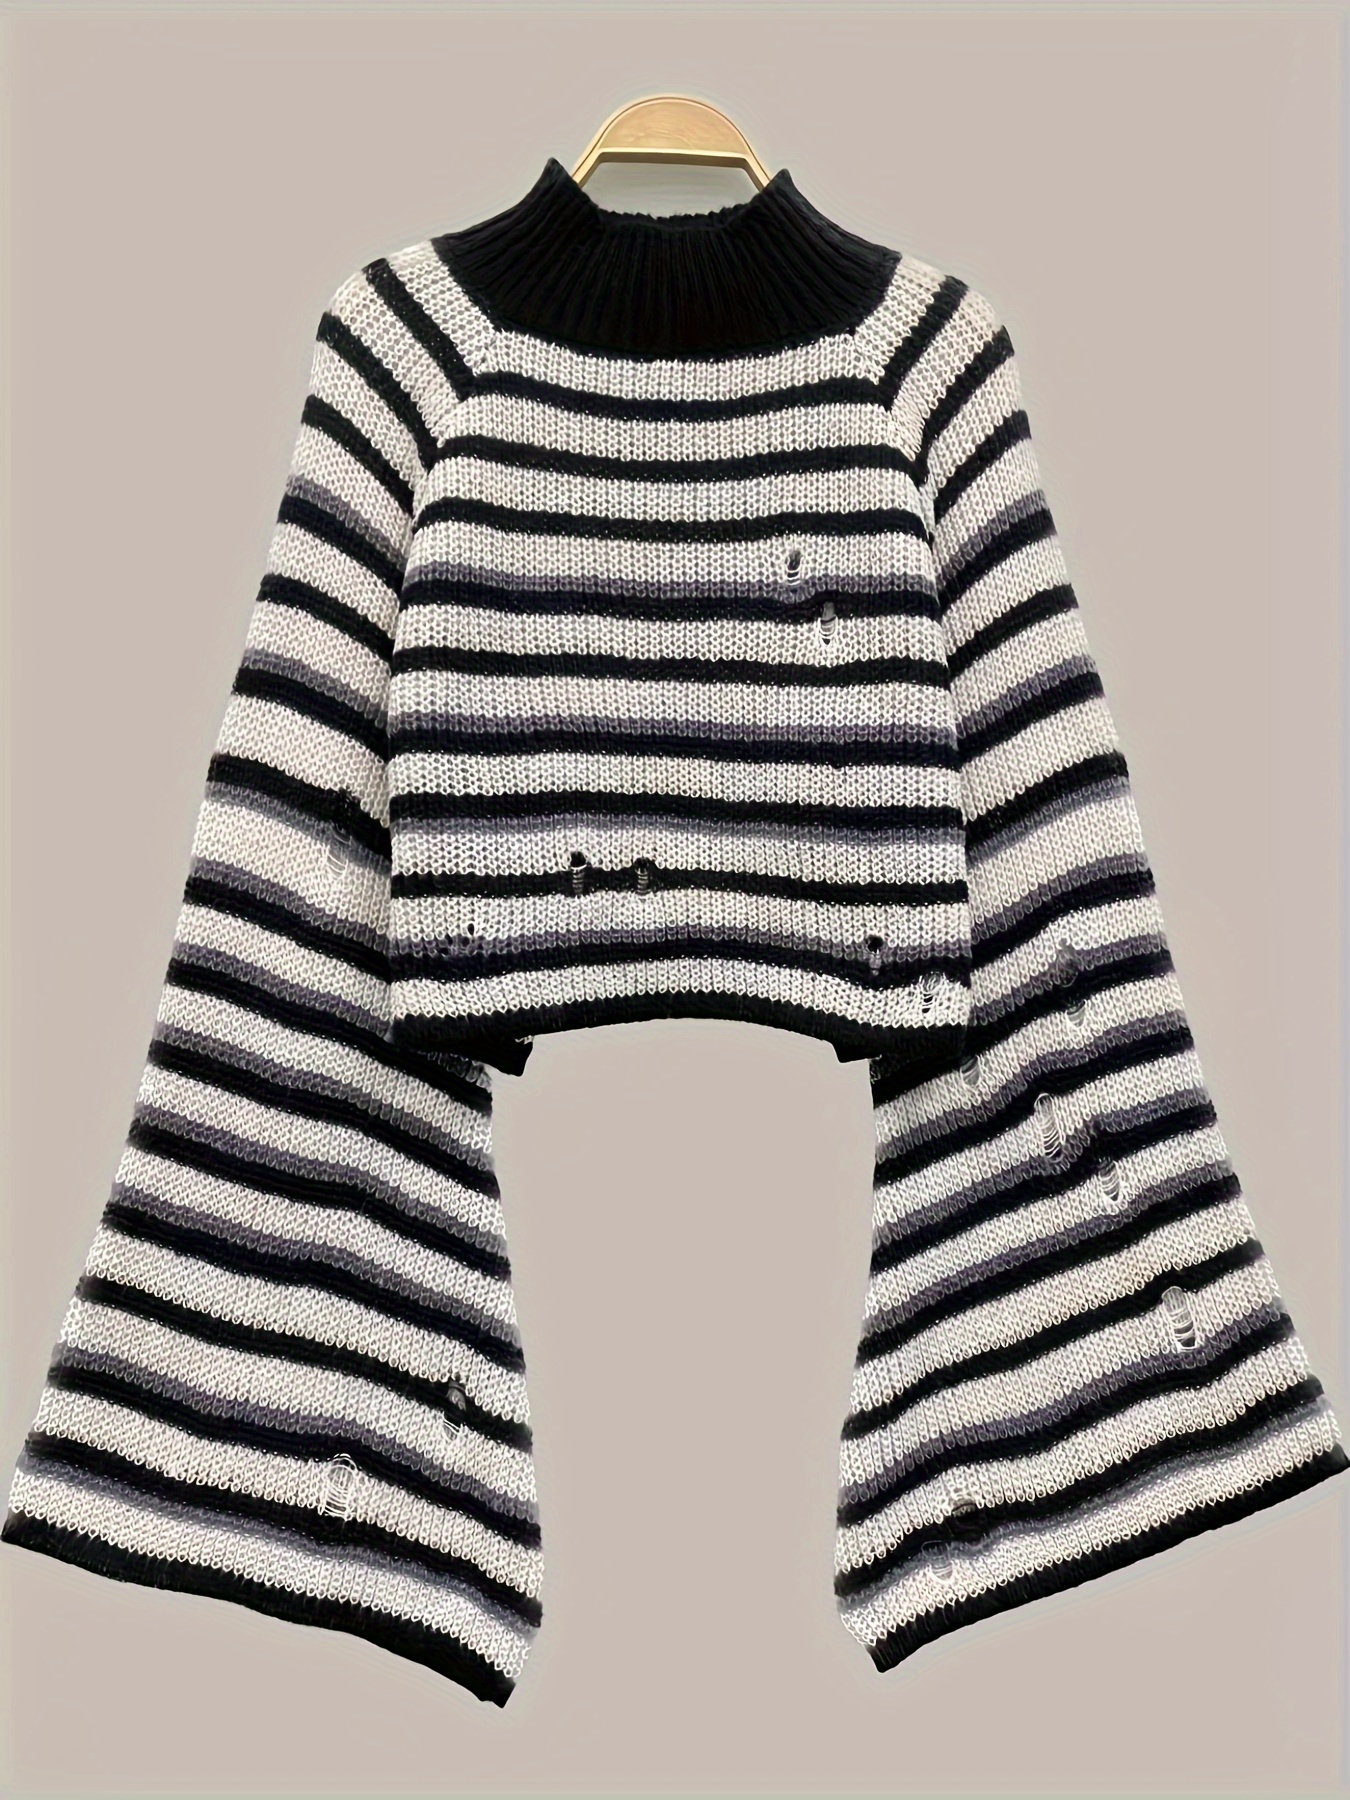 Vintage KMart Mock Turtleneck Striped Knit Cropped Sweater Womens L MCM 60s  70s 